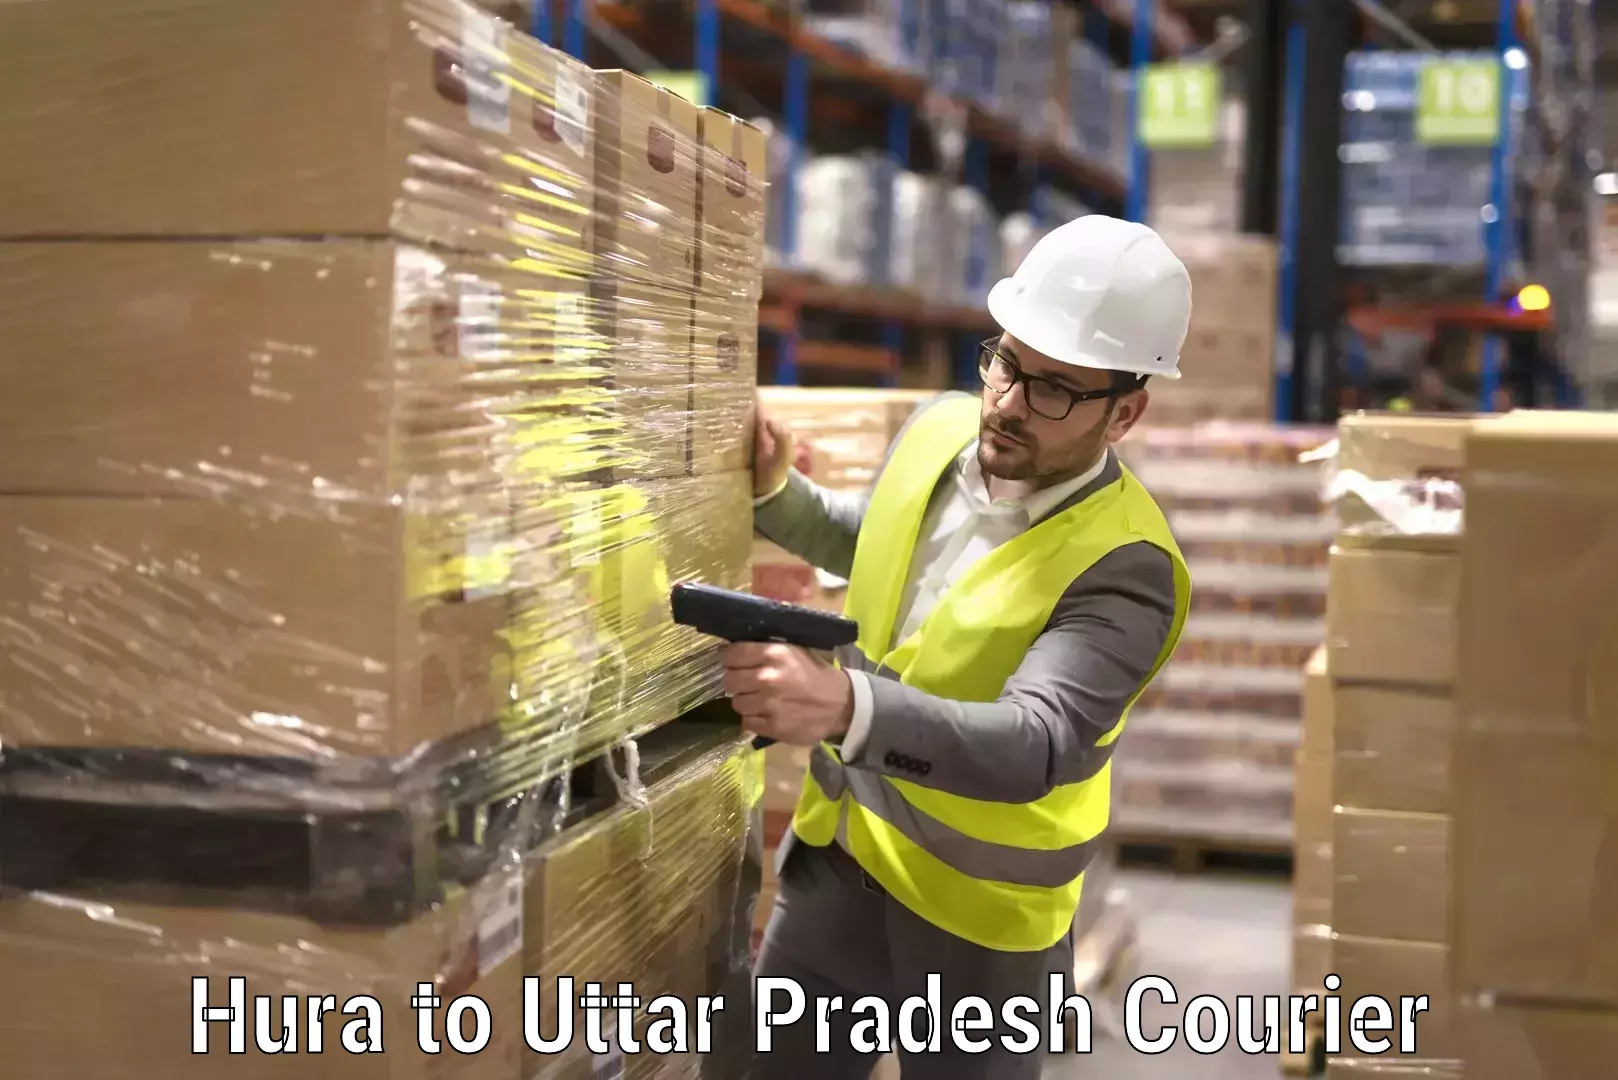 Efficient moving company Hura to Uttar Pradesh